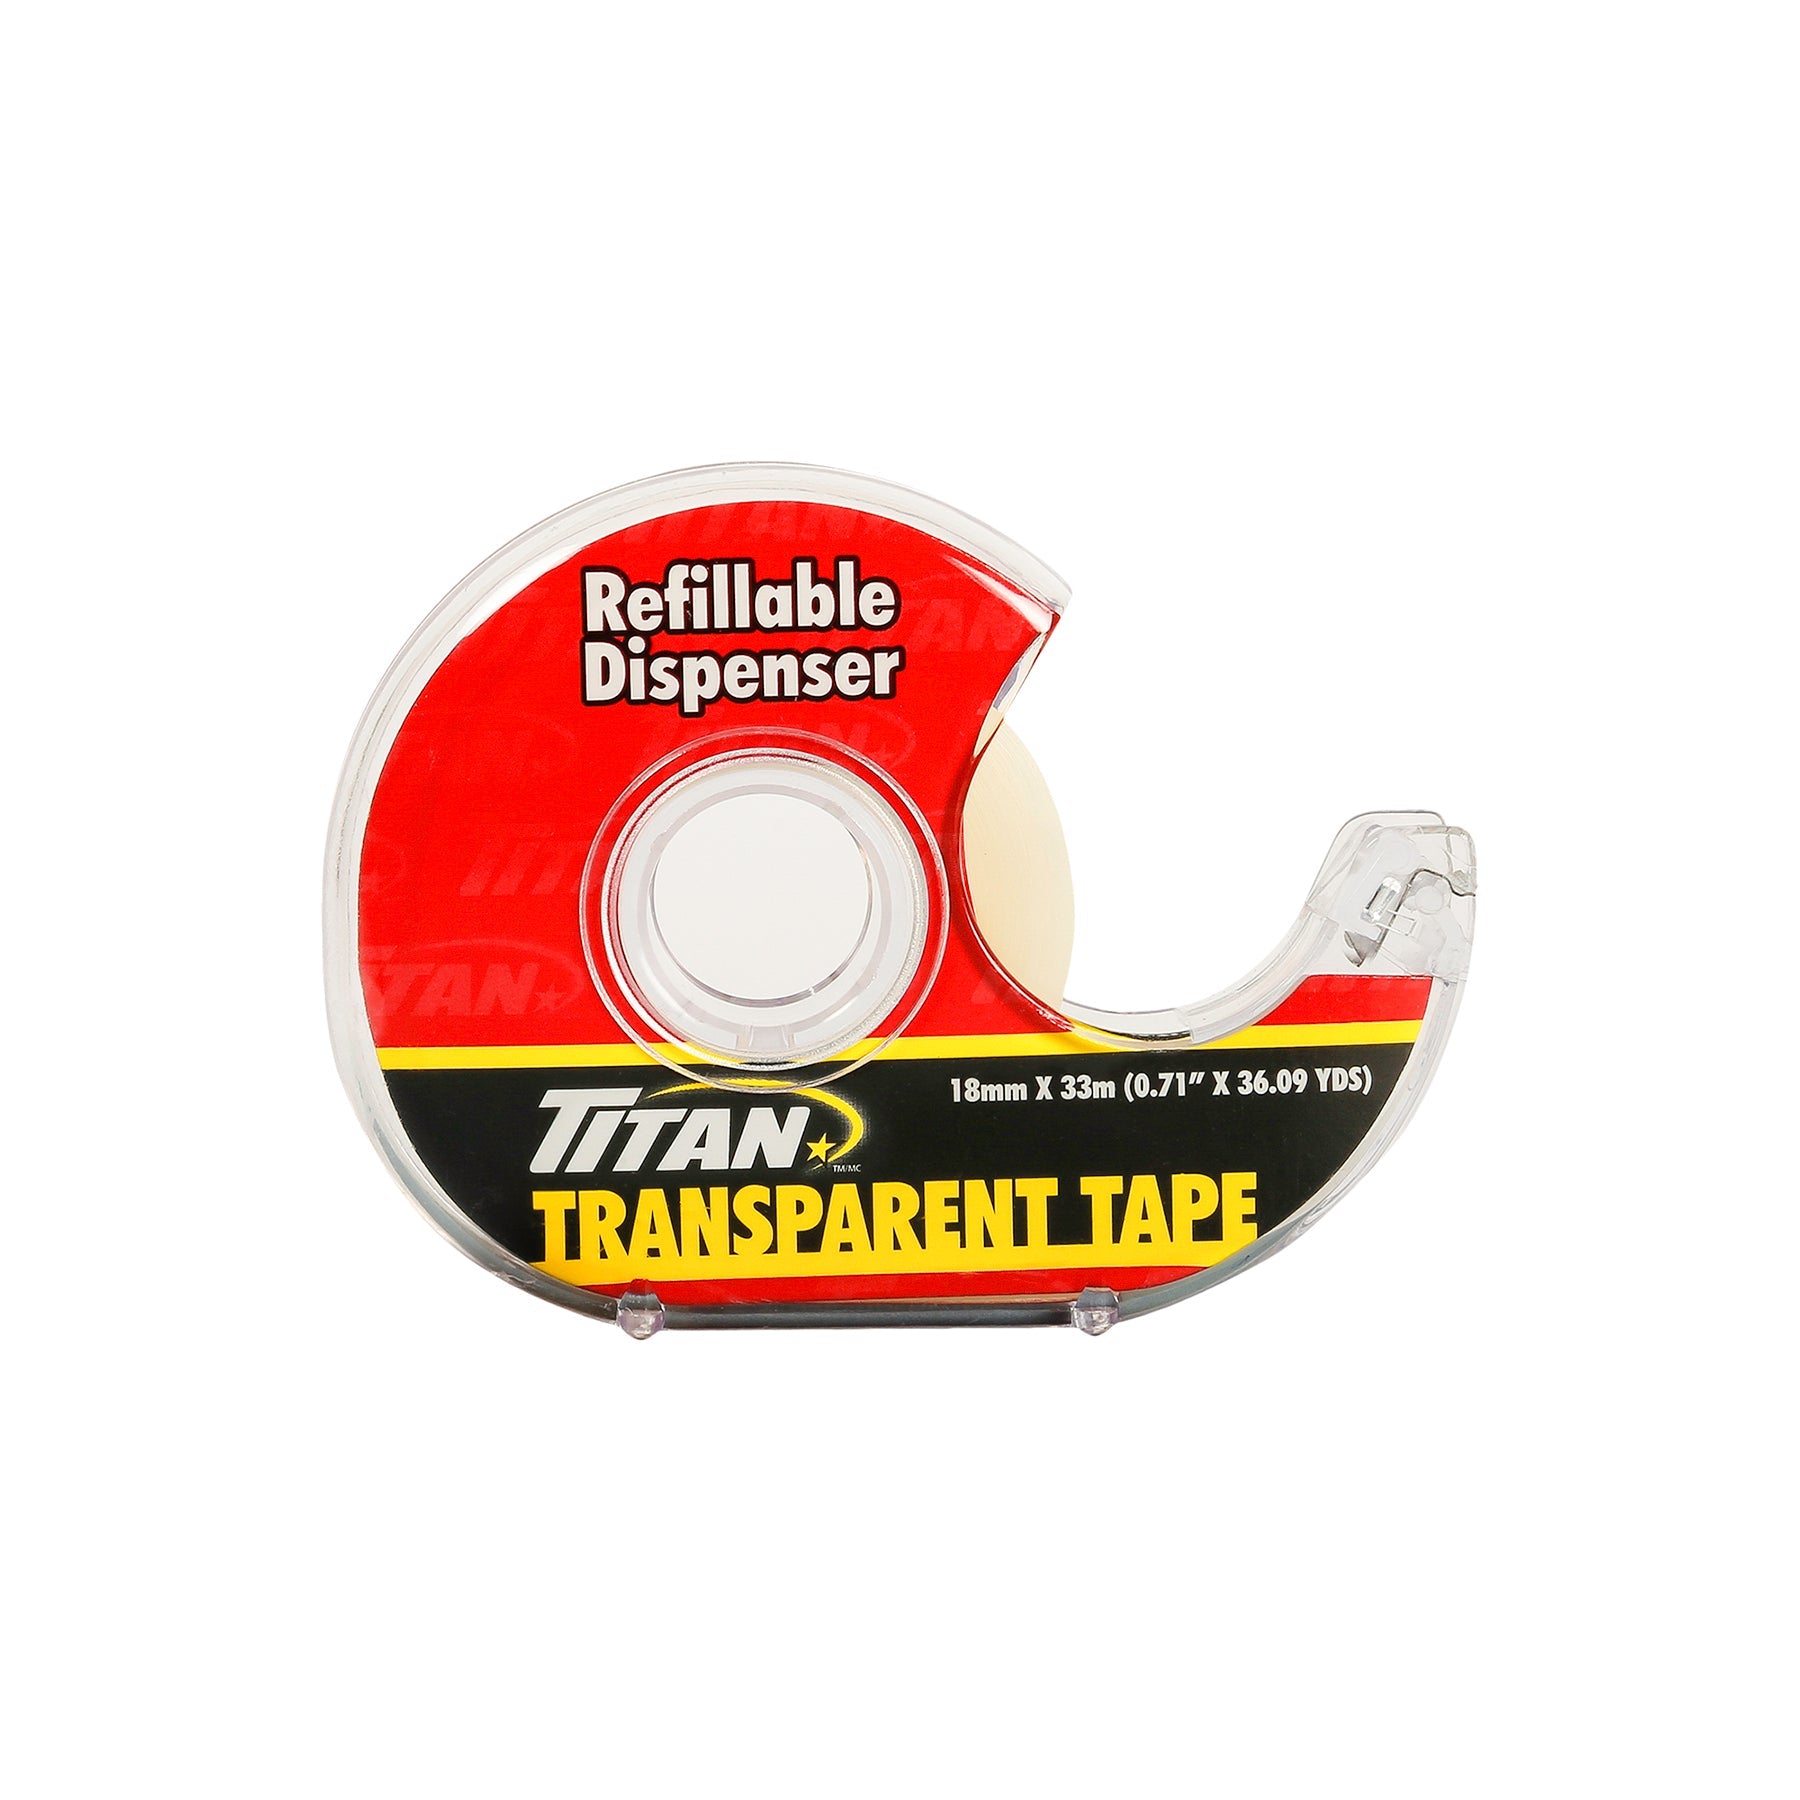 Titan Transparent Tape in Dispender 0.71in x 36.09yds